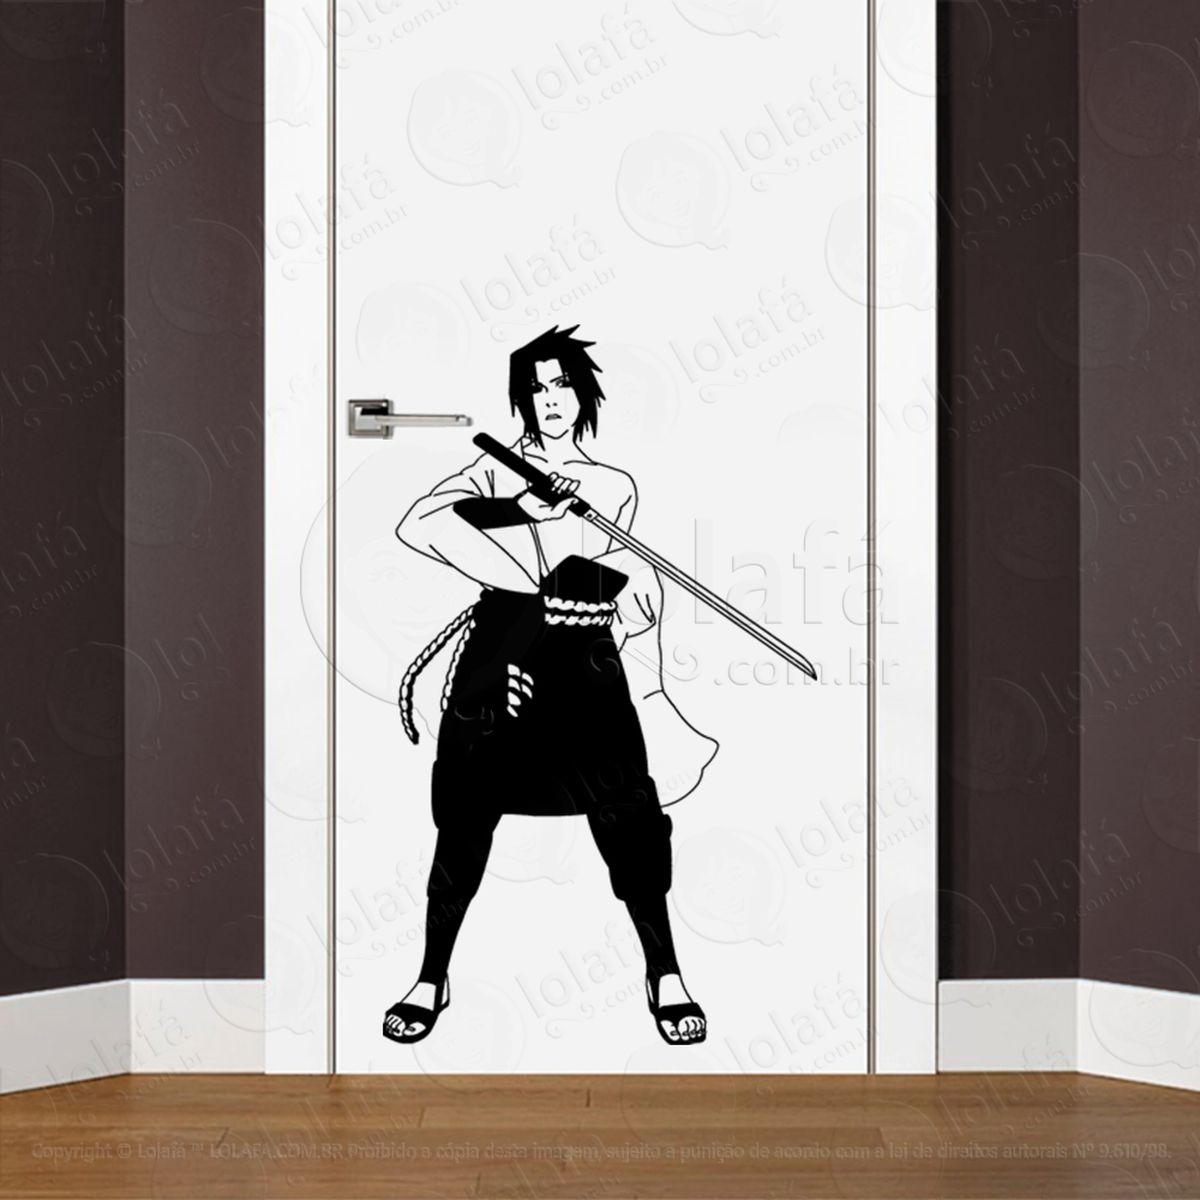 sasuke uchiha adesivo de parede para quarto, porta e vidro - mod:27